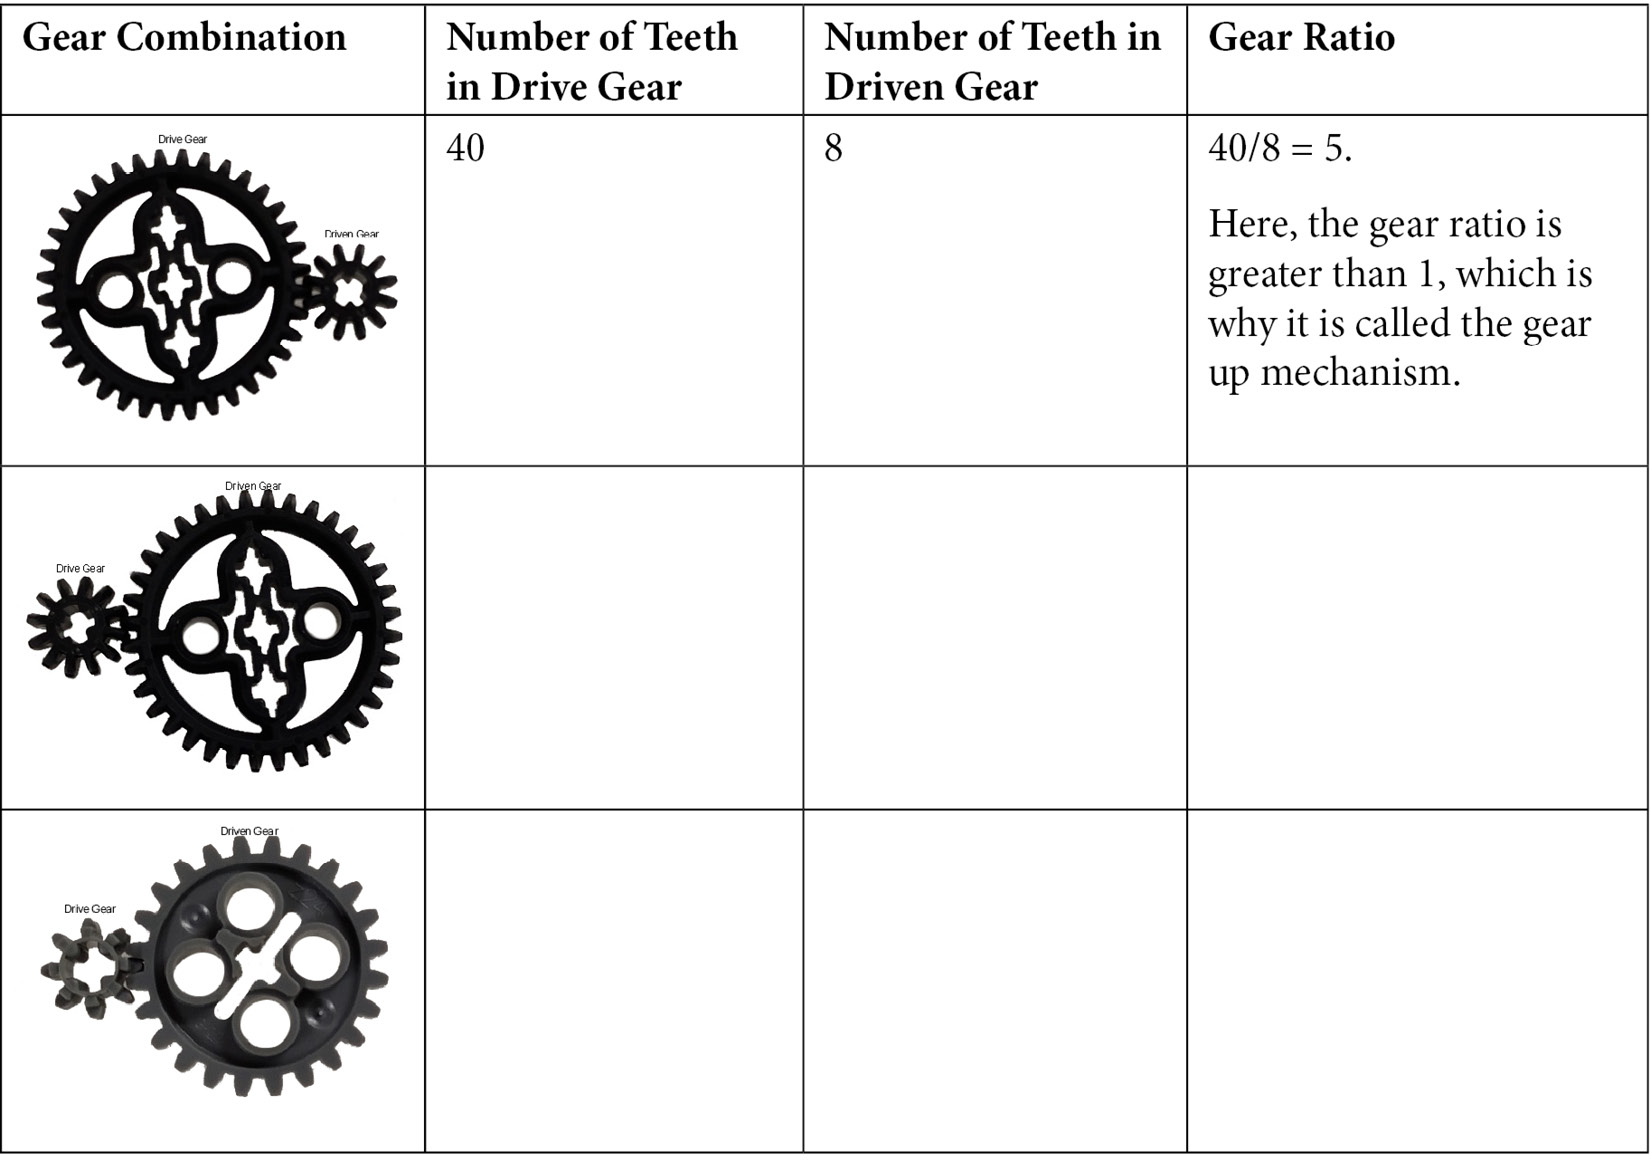 Table 5.2 - Calculating gear ratio
